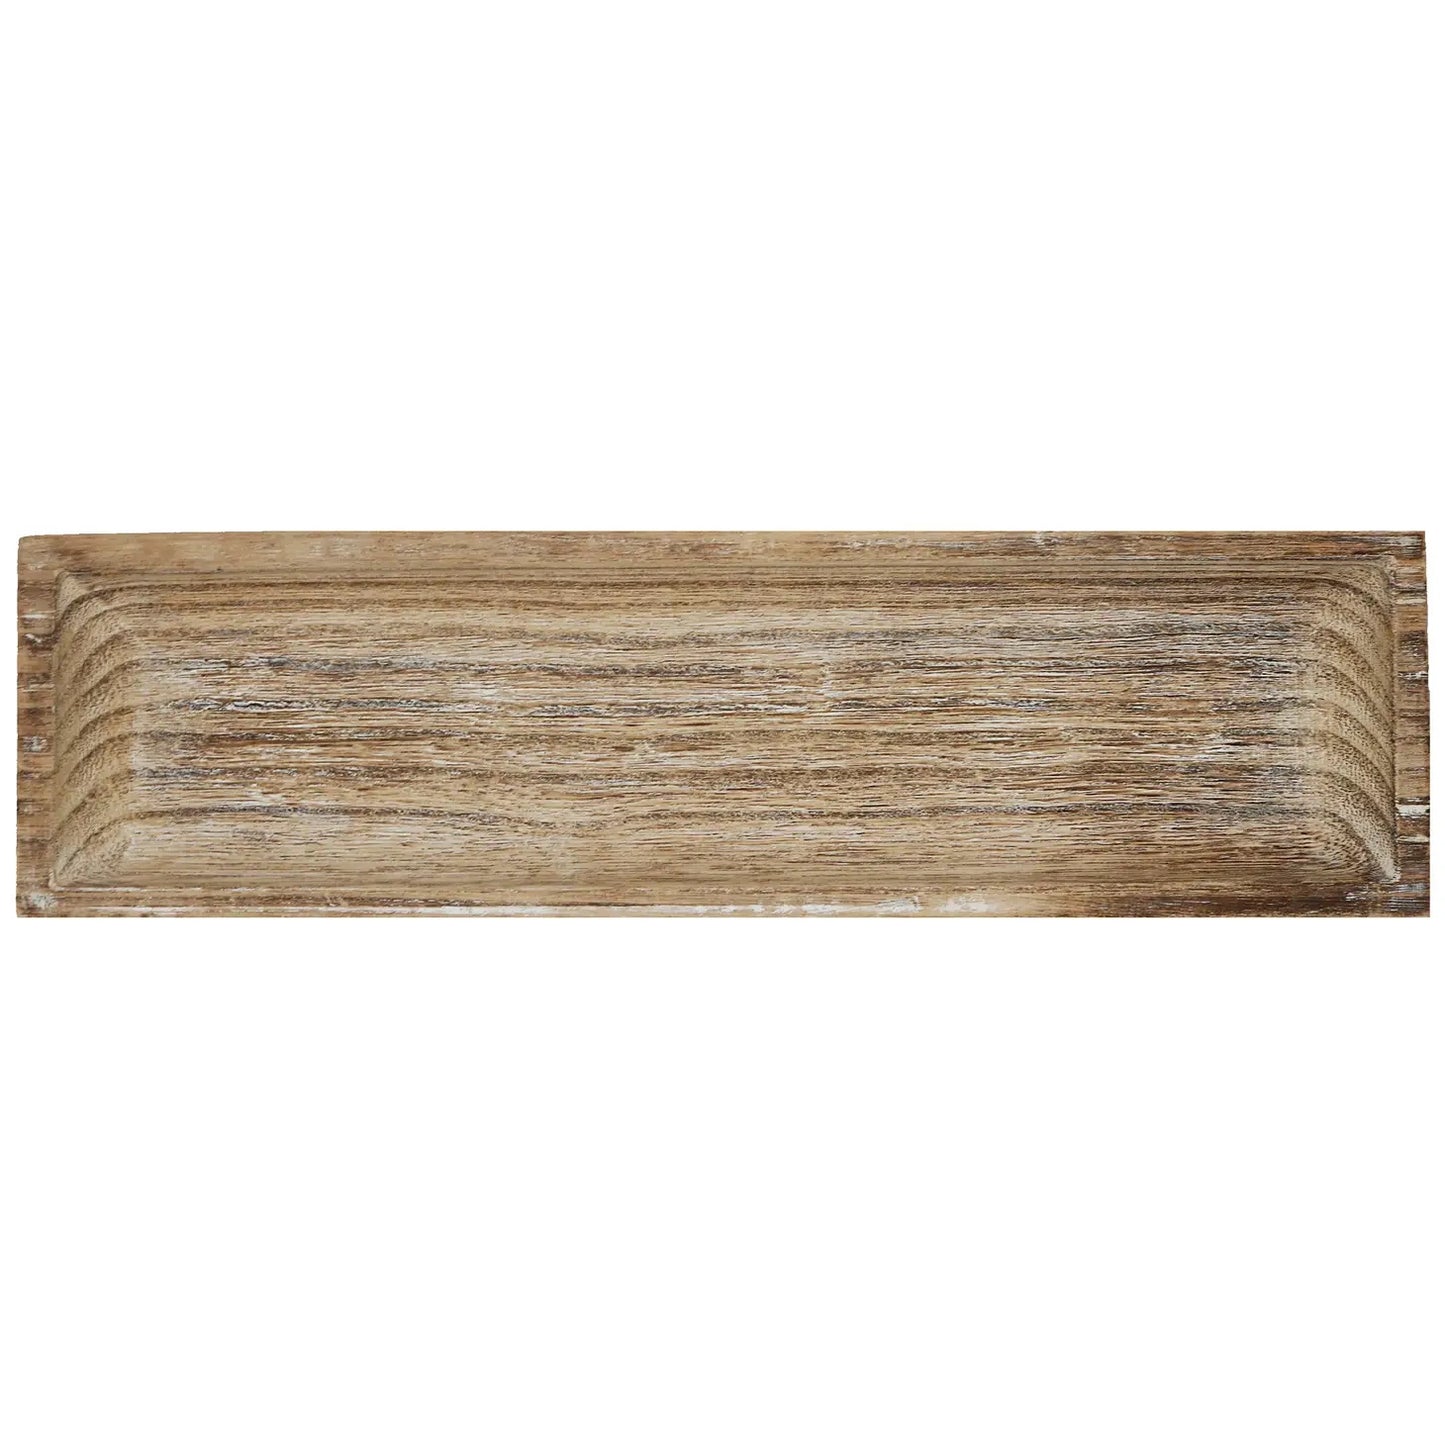 Rectangular Wood Decorative Tray - Rustic - 14x4"